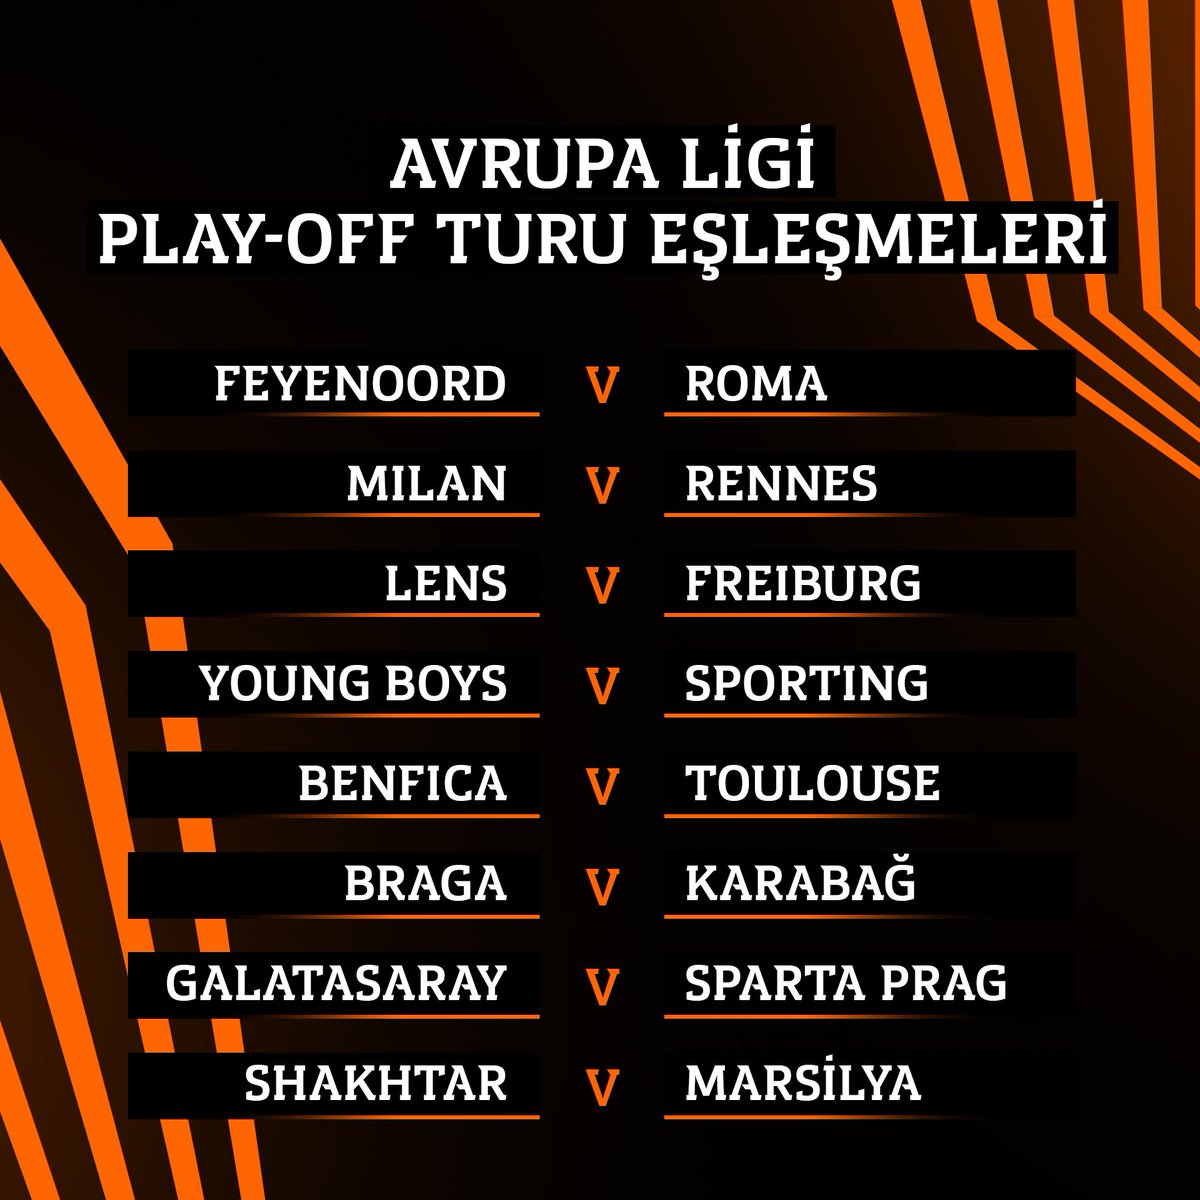 ✅ Avrupa Ligi'nde play-off turu eşleşmeleri belli oldu.

#AvrupaLigi #Galatasaray #Gameofbet #pazartesi #marmara #tadelle #ardaguler #realmadrid